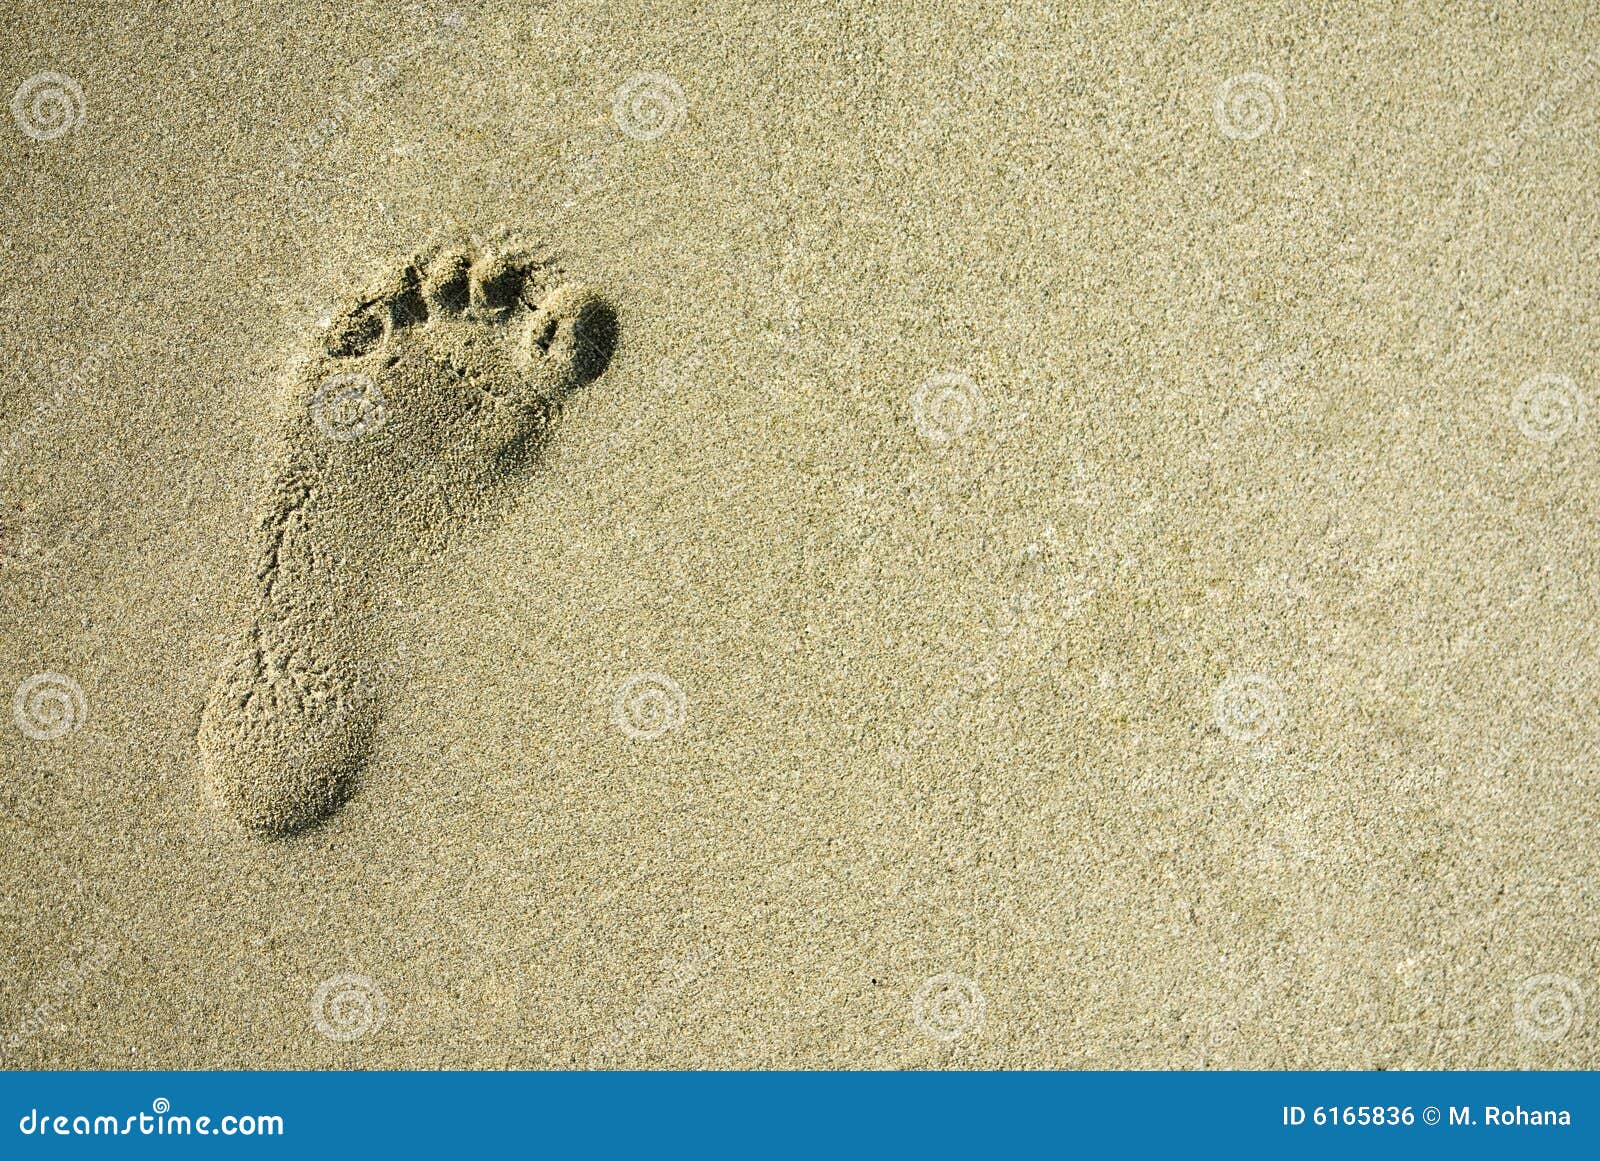 foot imprint on sand